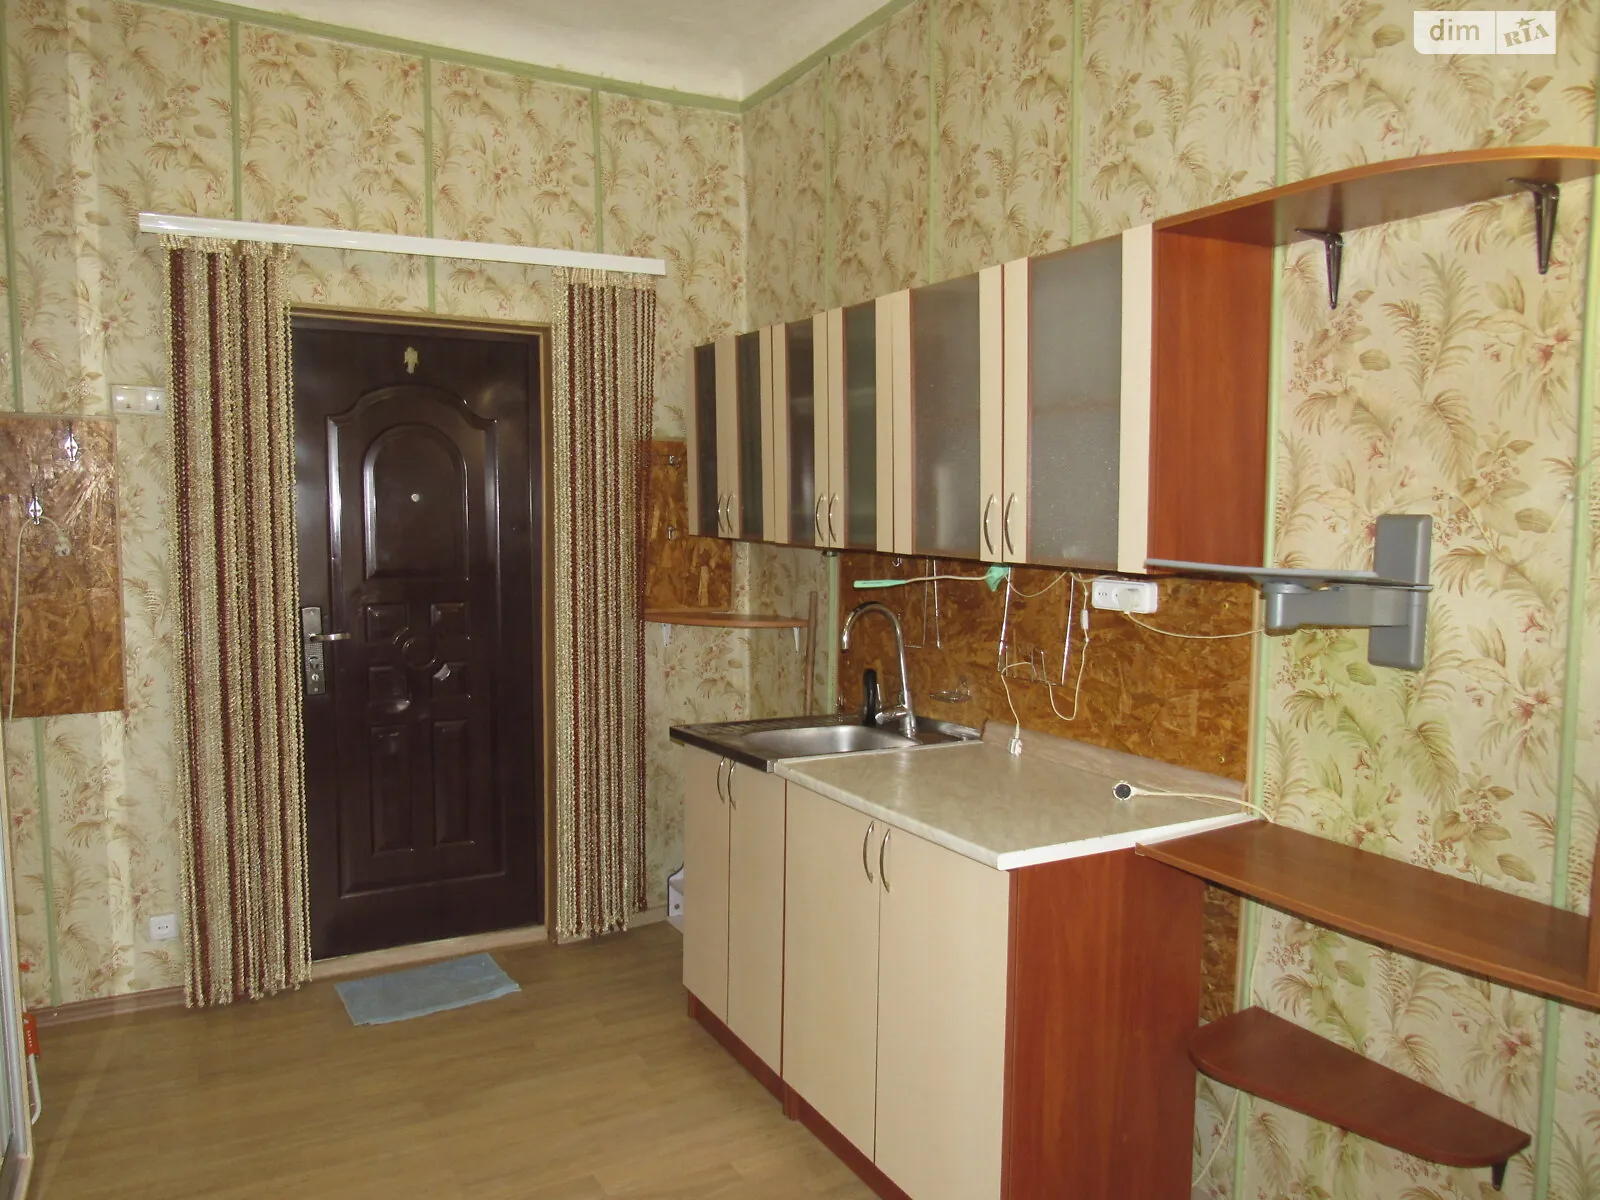 Продается комната 15 кв. м в Николаеве - фото 3